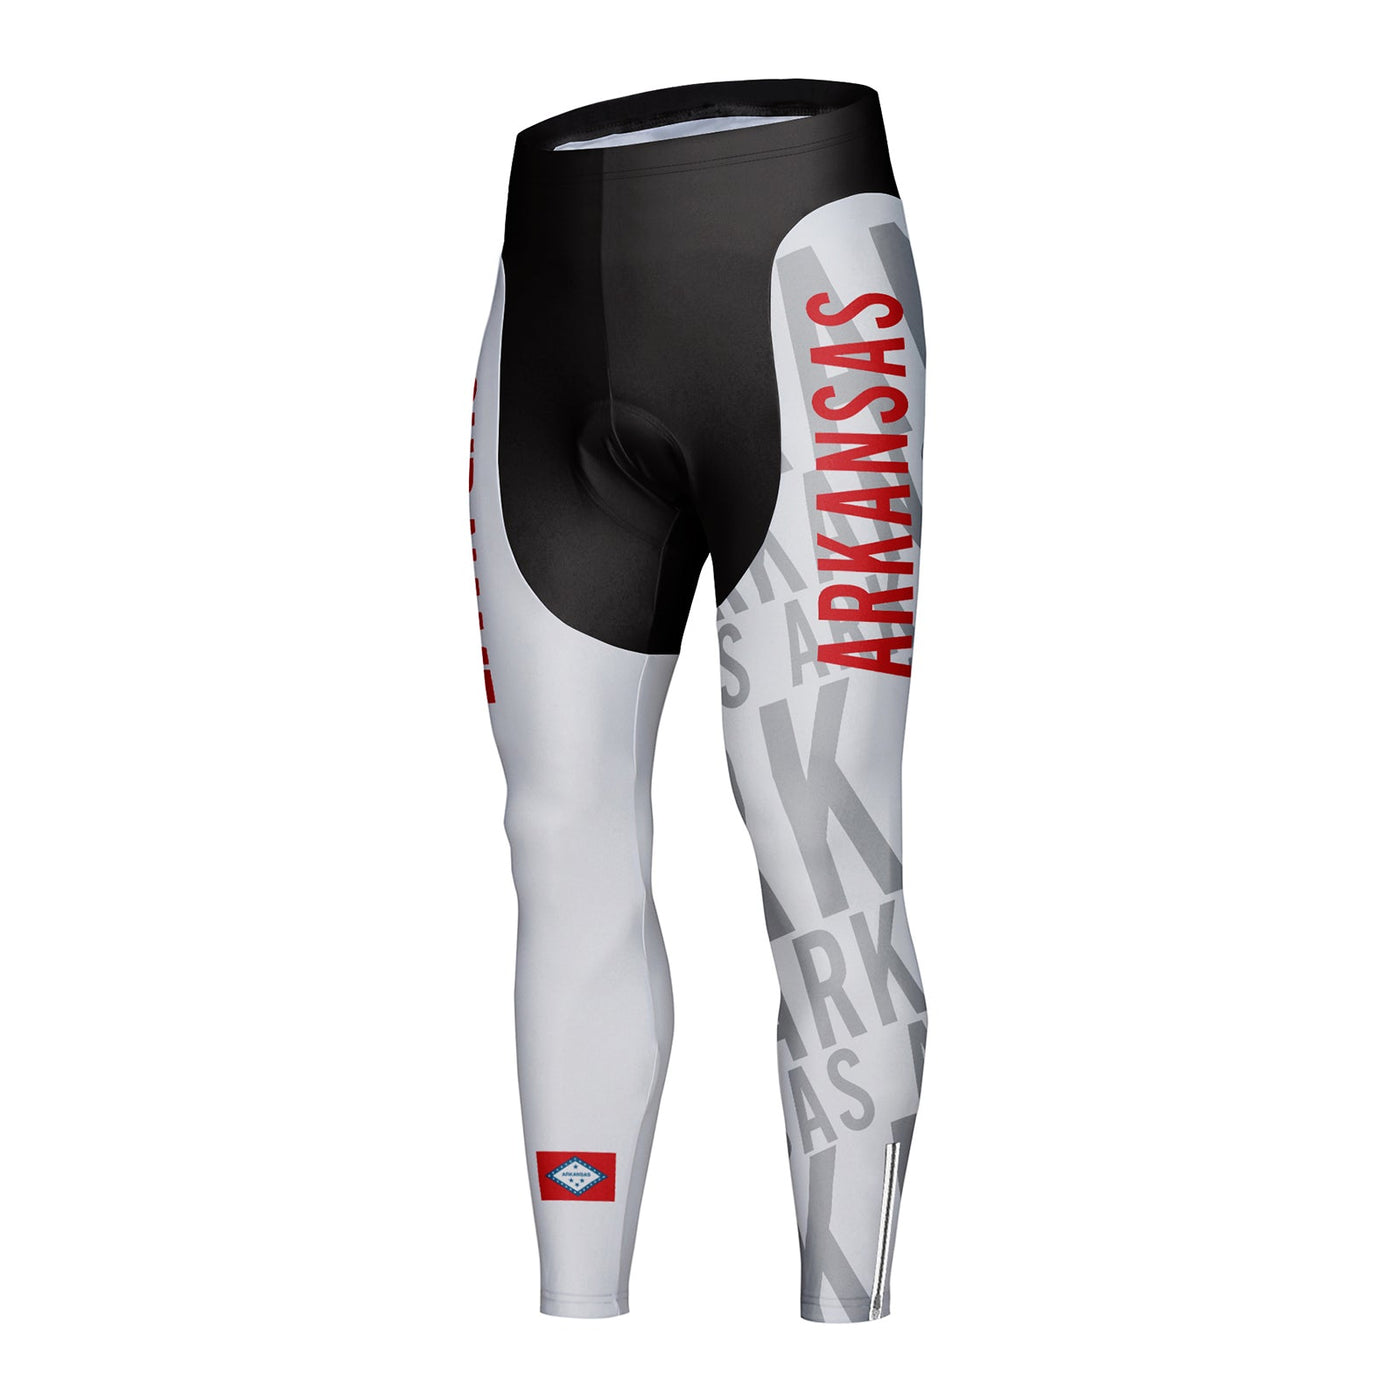 Customized Arkansas Unisex Thermal Fleece Cycling Tights Long Pants